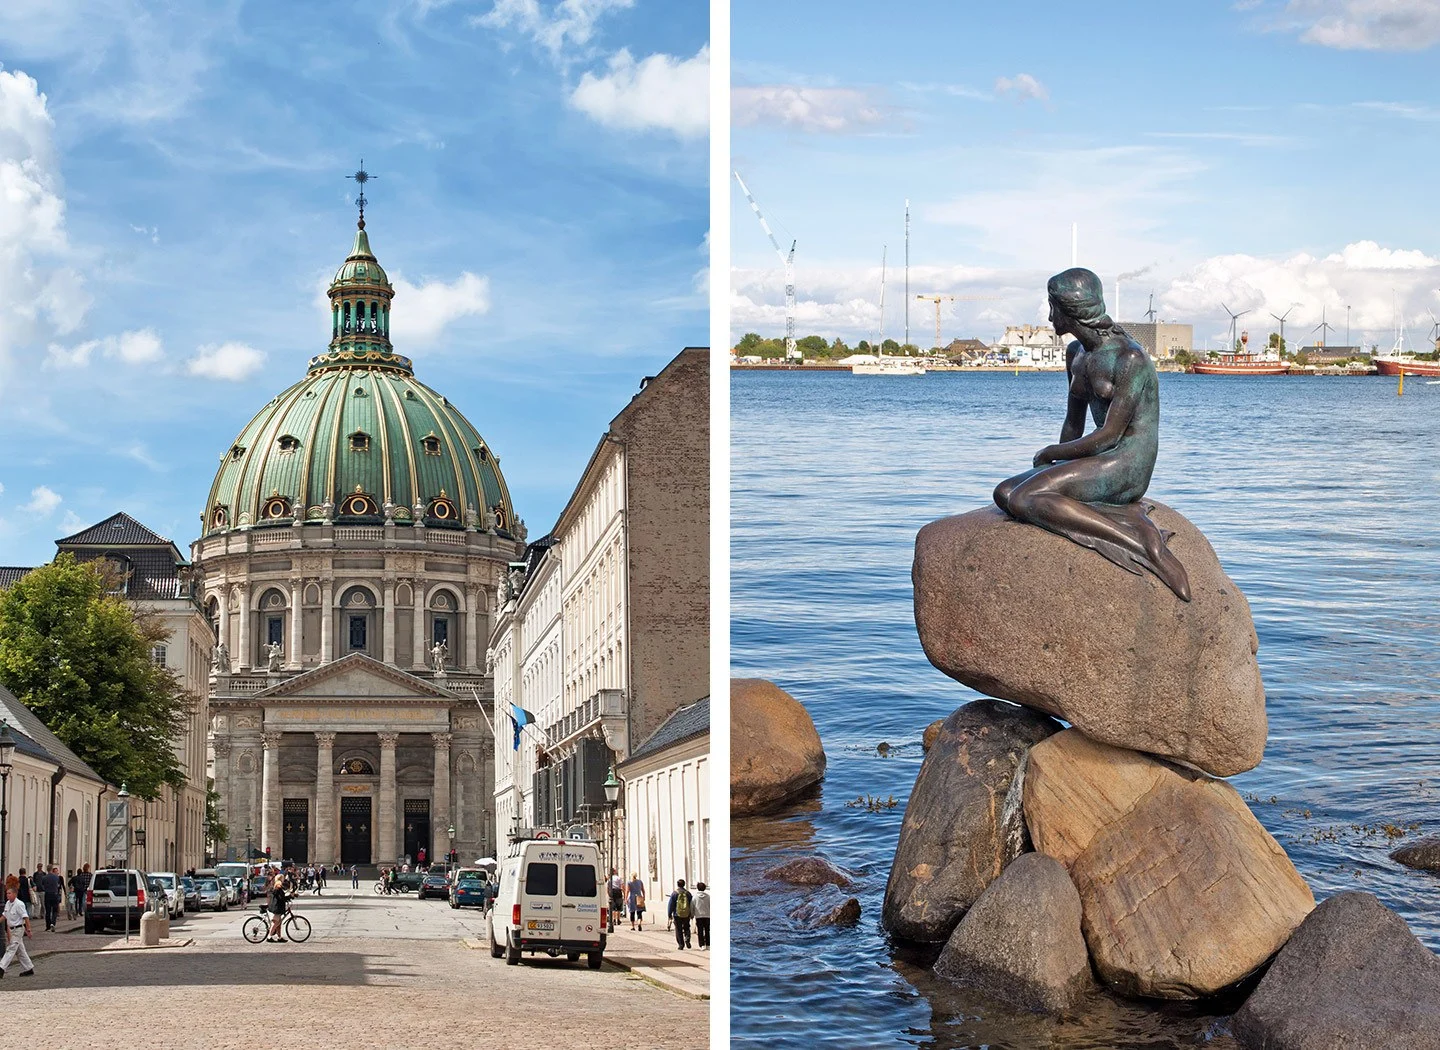 The Christiansborg Palace and Little Mermaid, Copenhagen